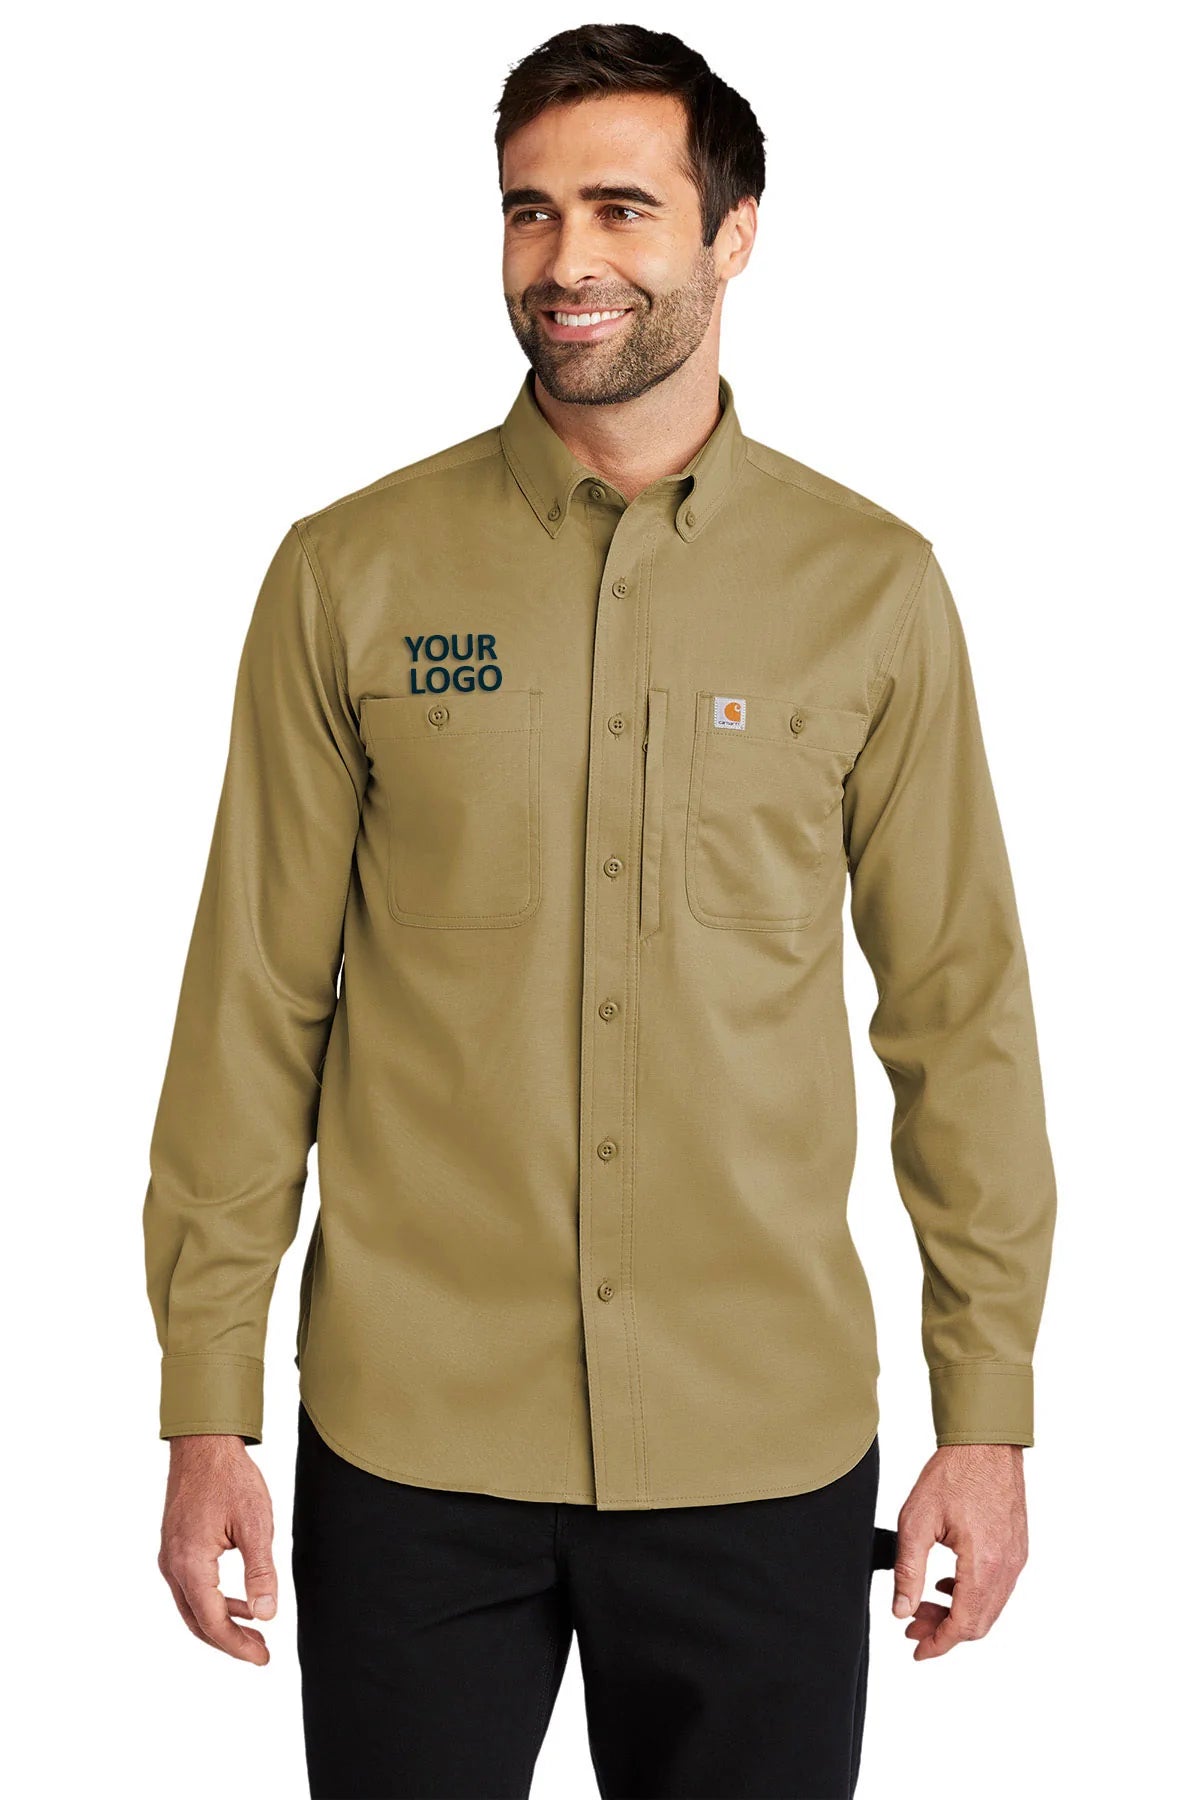 Carhartt Rugged Professional Series Long Sleeve Shirt CT102538 Dark Khaki